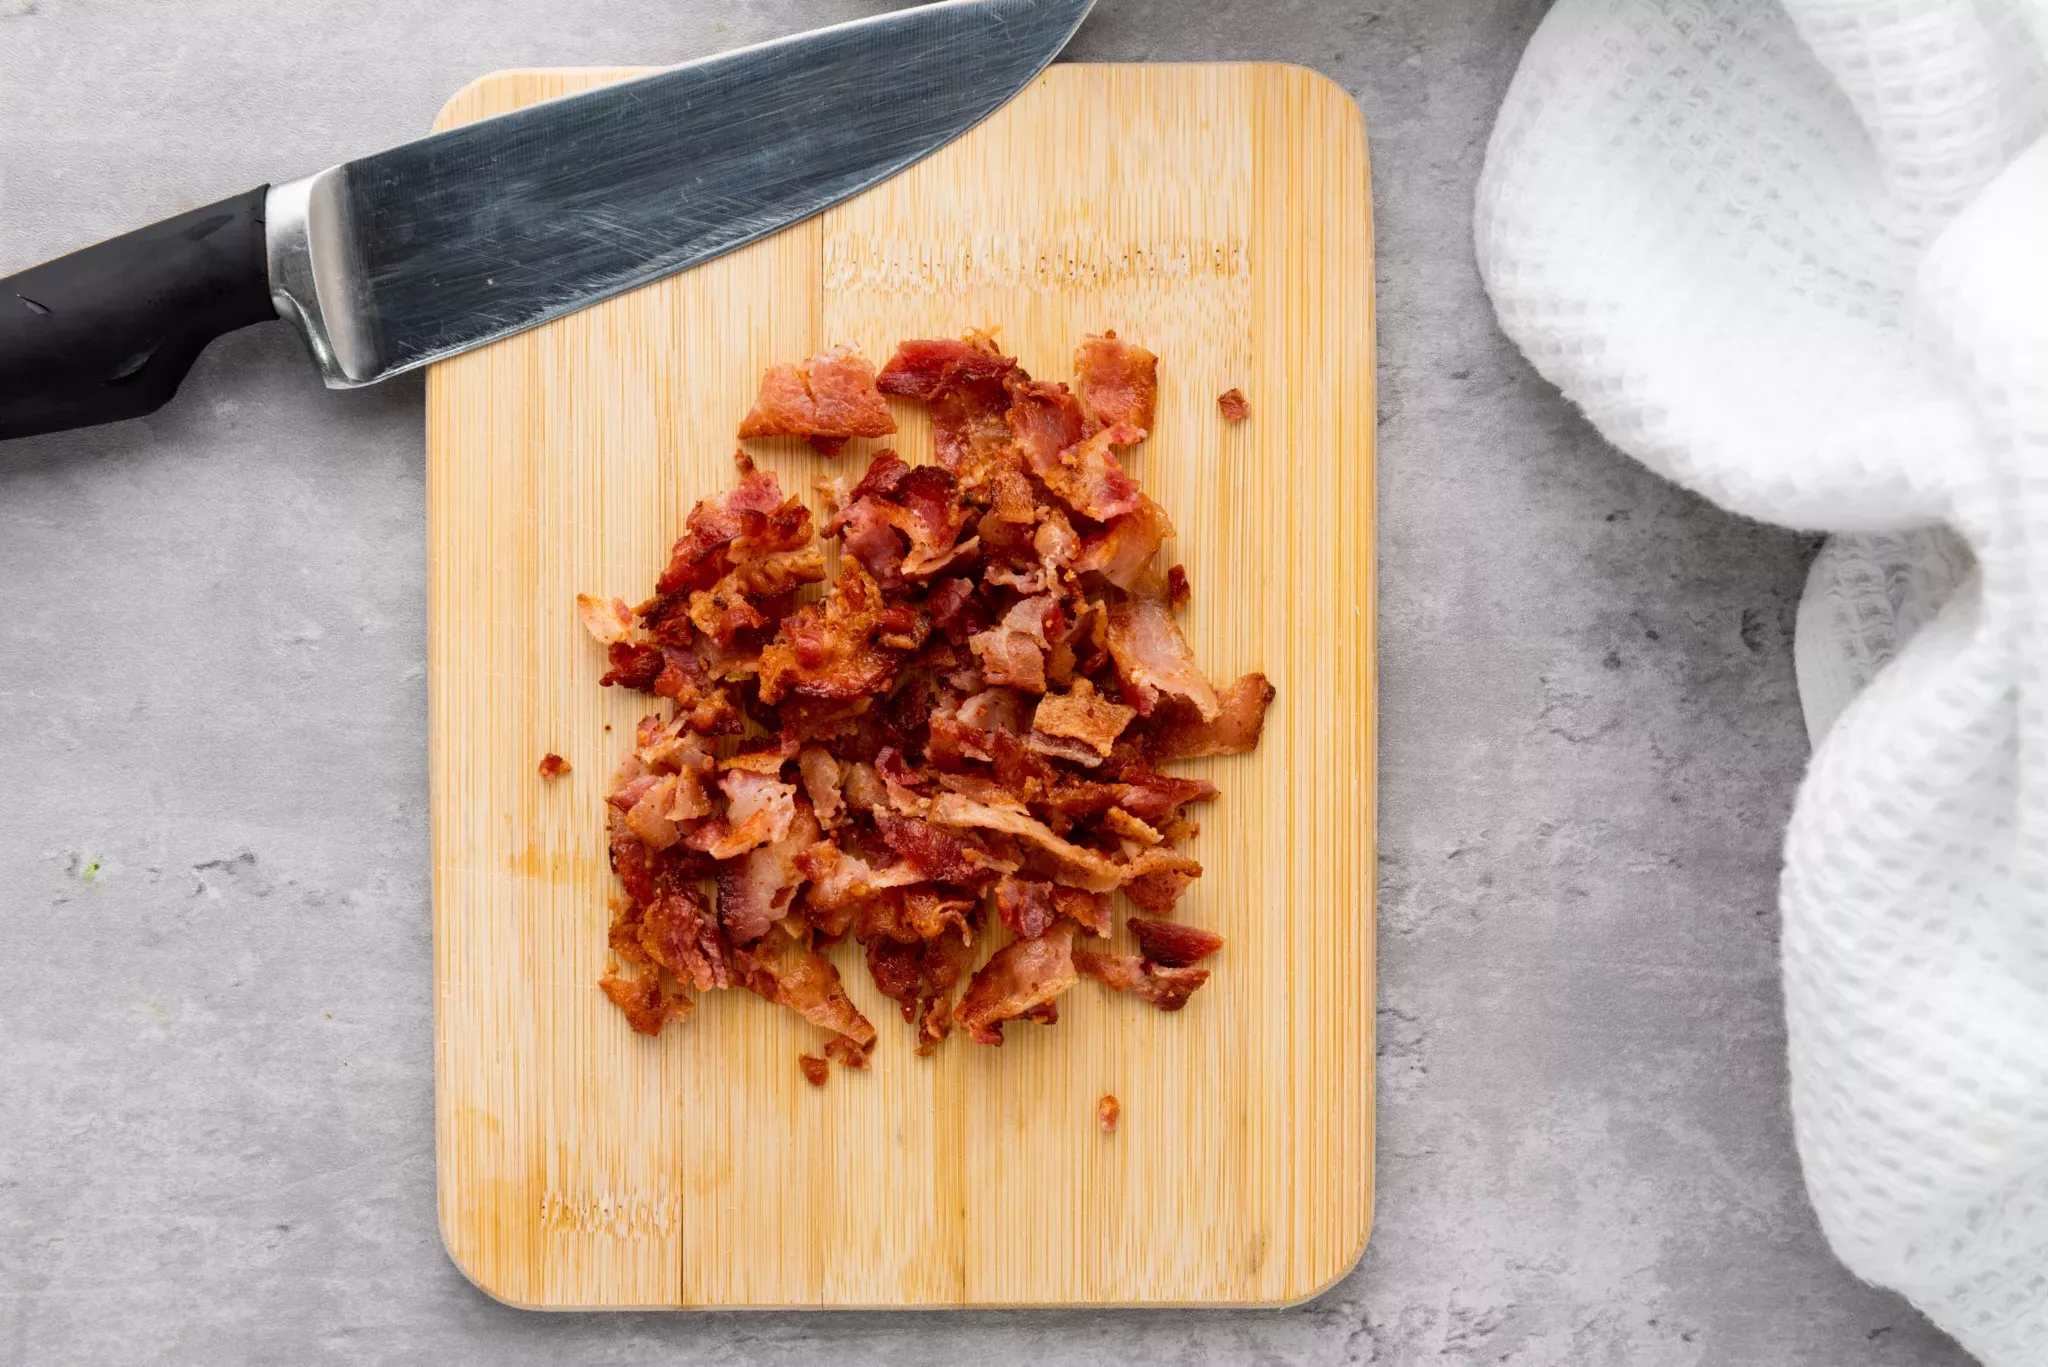 chopped bacon on a wooden board